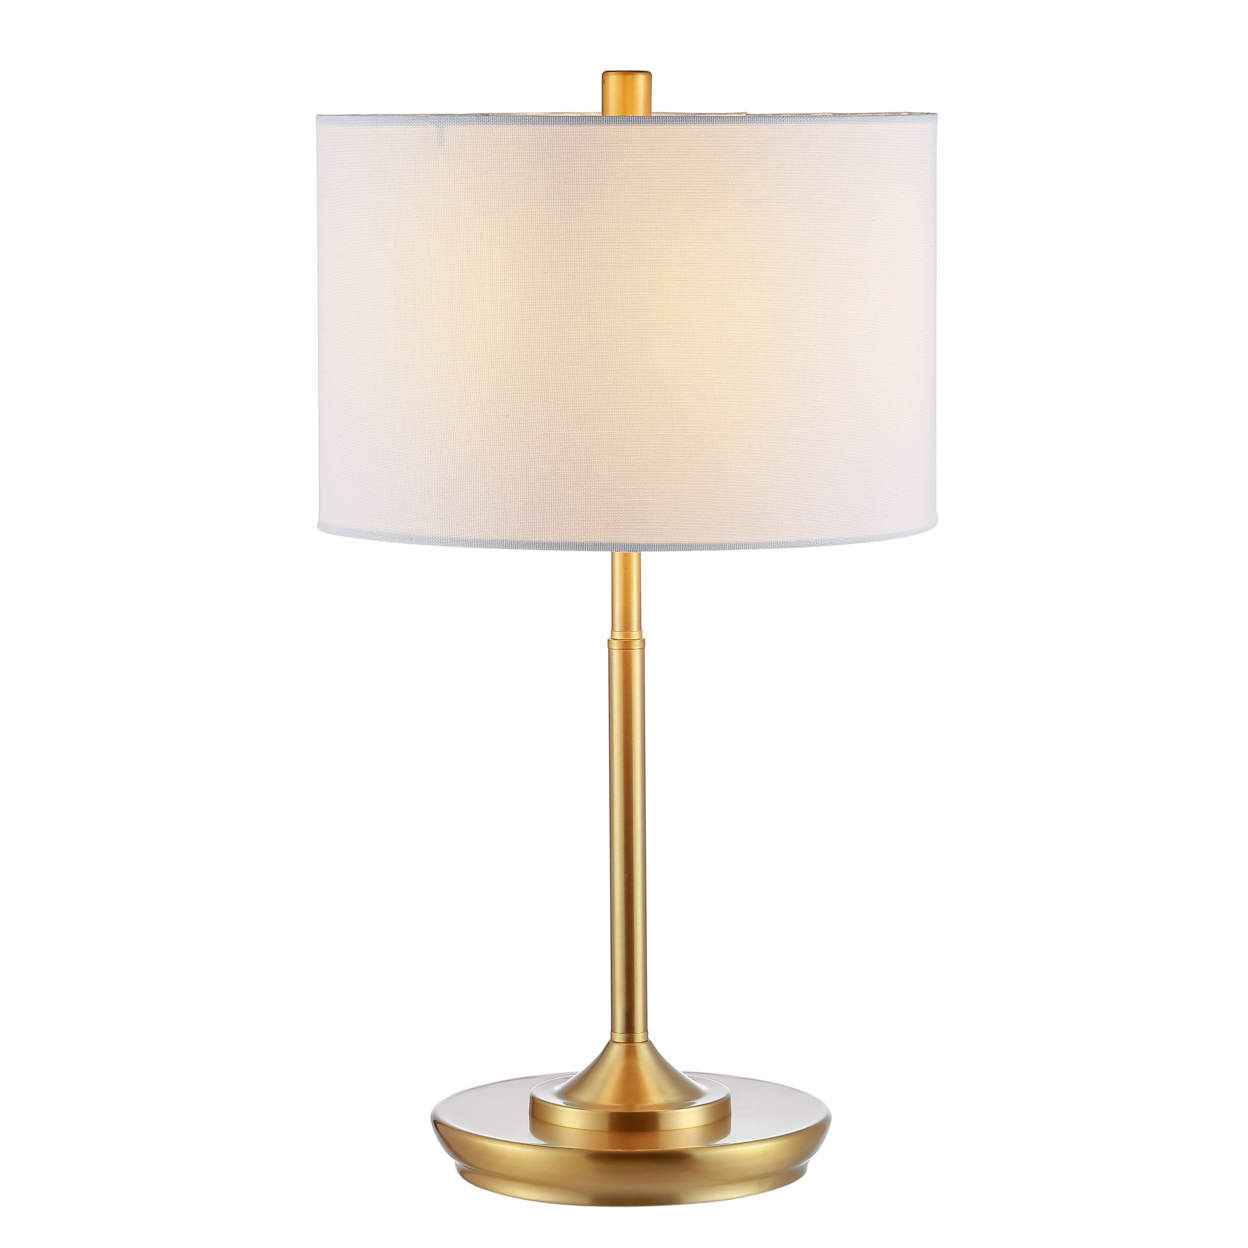 SAFAVIEH Taren Glam Table Lamp, Brass Gold, Set of 2 - image 7 of 7